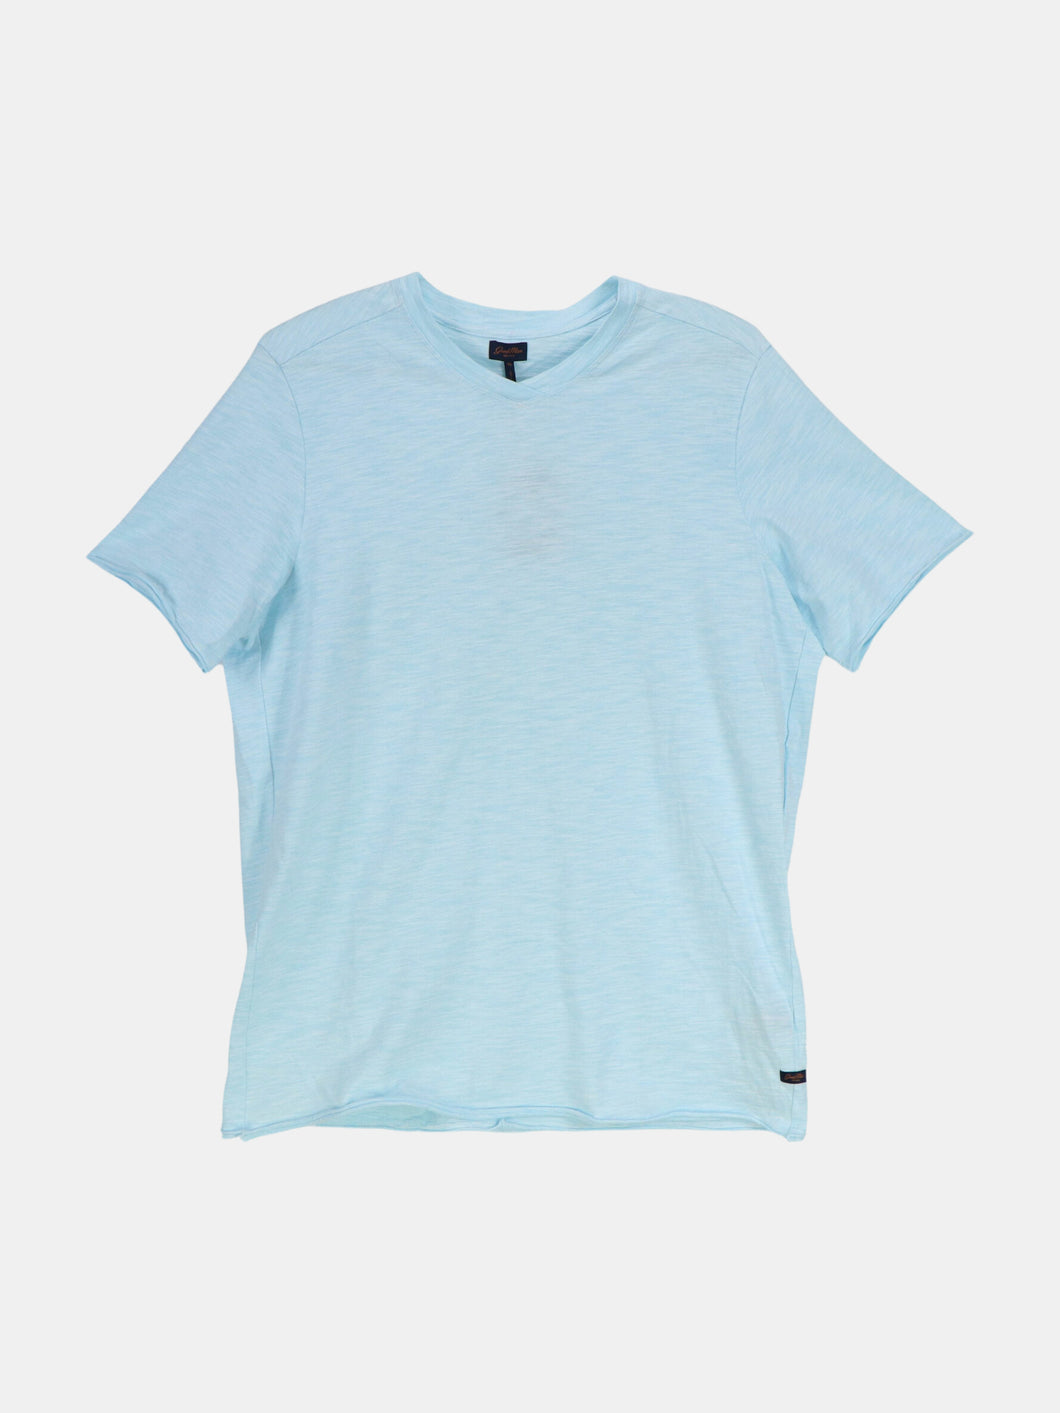 Good Man Brand Men's Blue Topaz Modern Shinjuku Stripe Vee Graphic T-Shirt